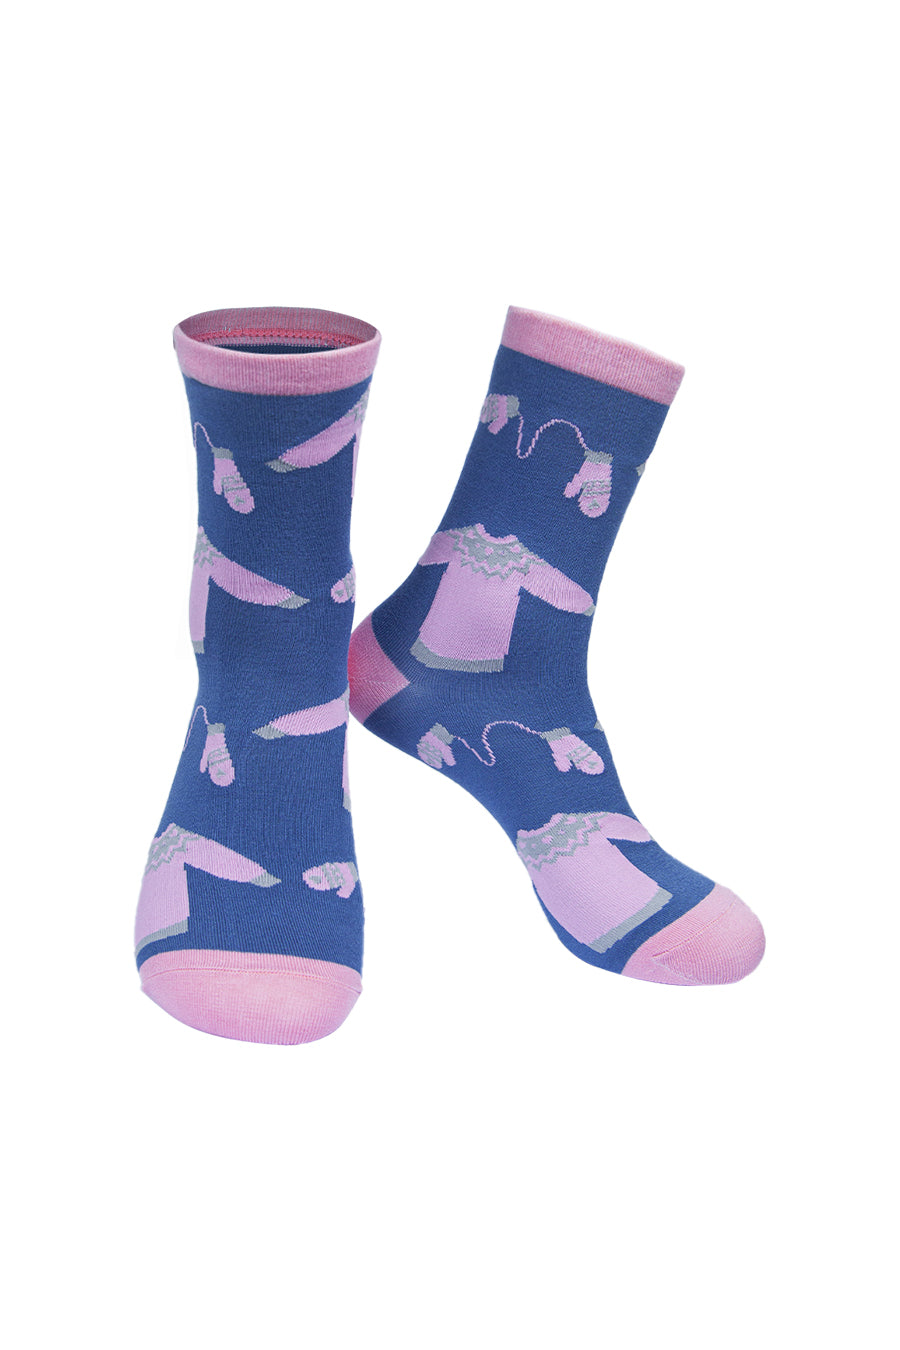 Womens Bamboo Christmas Socks Xmas Jumper Novelty Ankle Socks Blue Pink